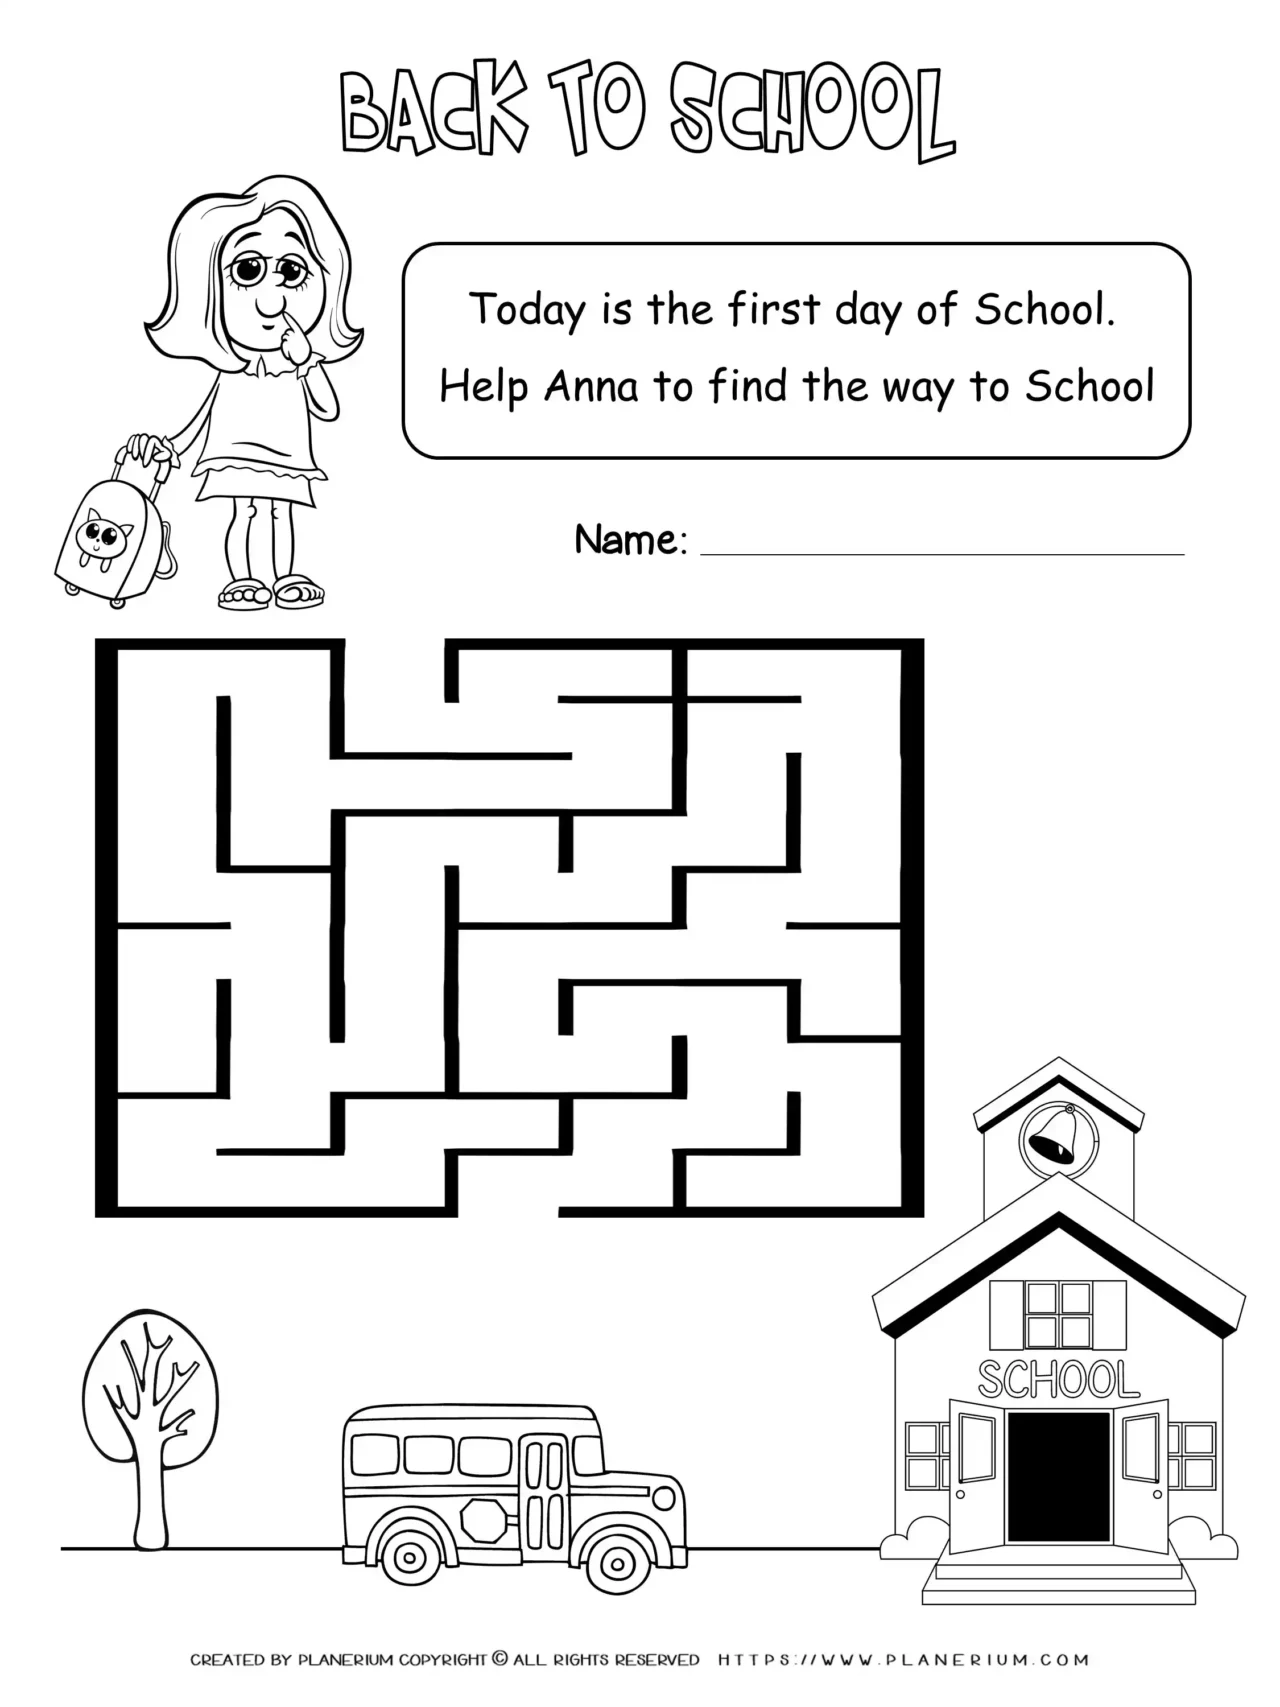 Back to School - Worksheet - Maze to School